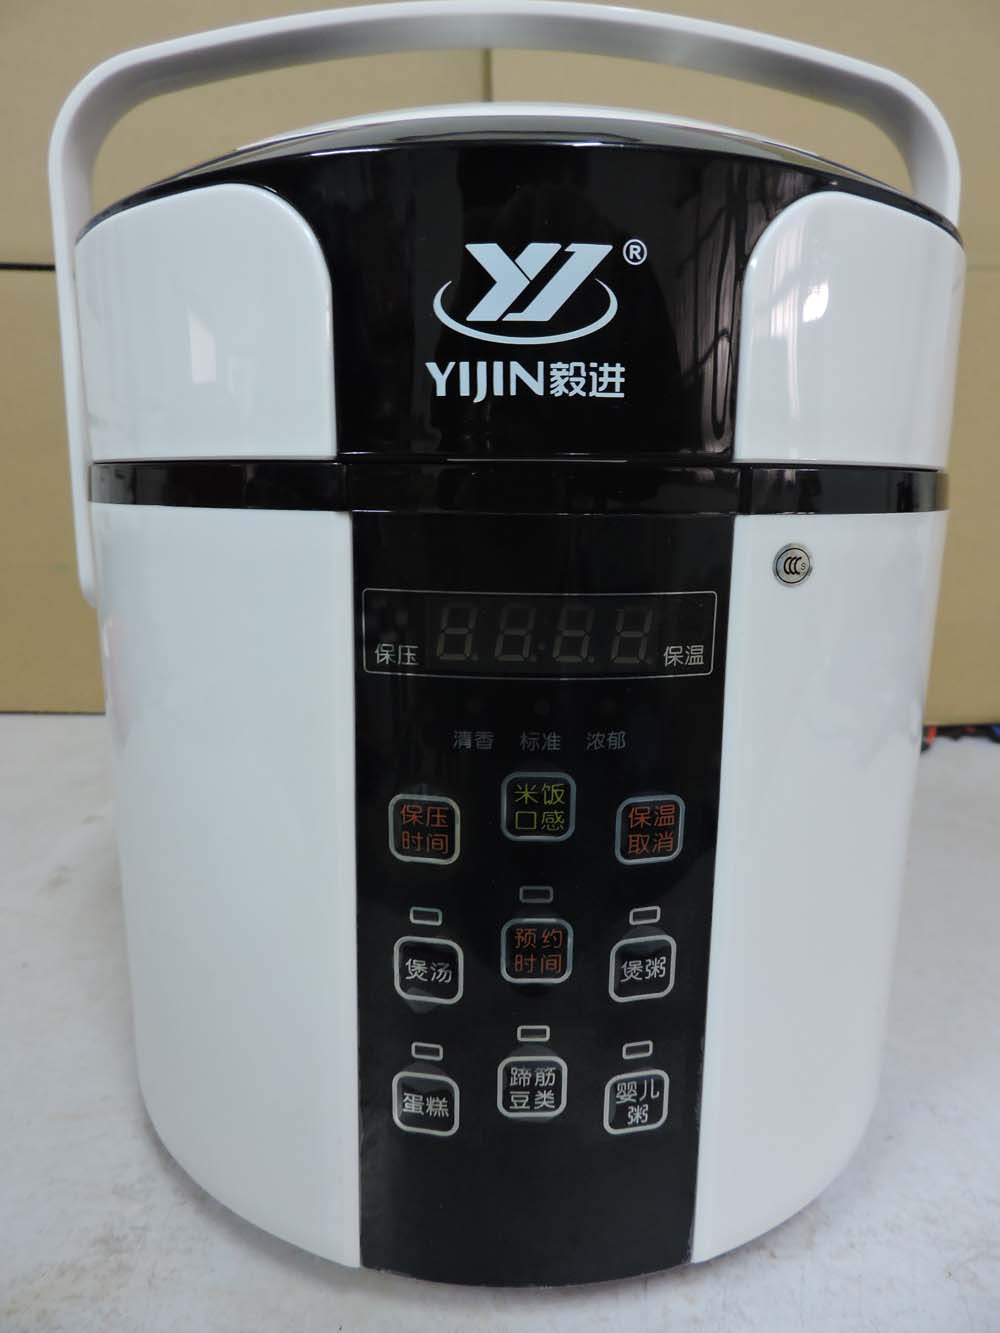 Yi jin electric pressure cooker